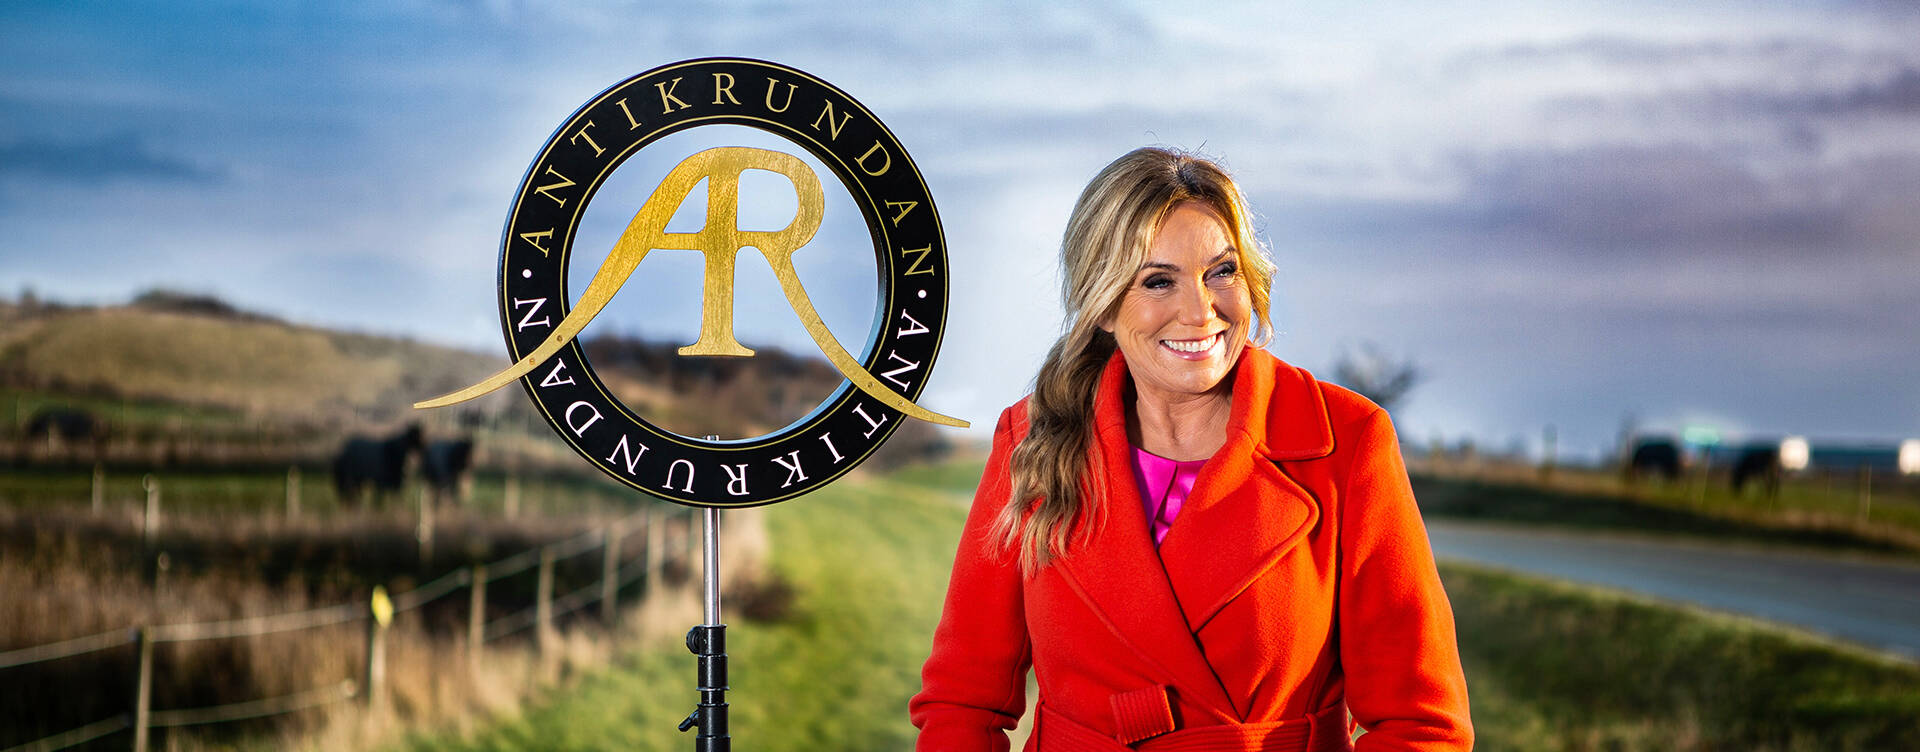 Popular TV programs Antikrundan will visit 6 places in Sweden this summer – TheMayor.EU